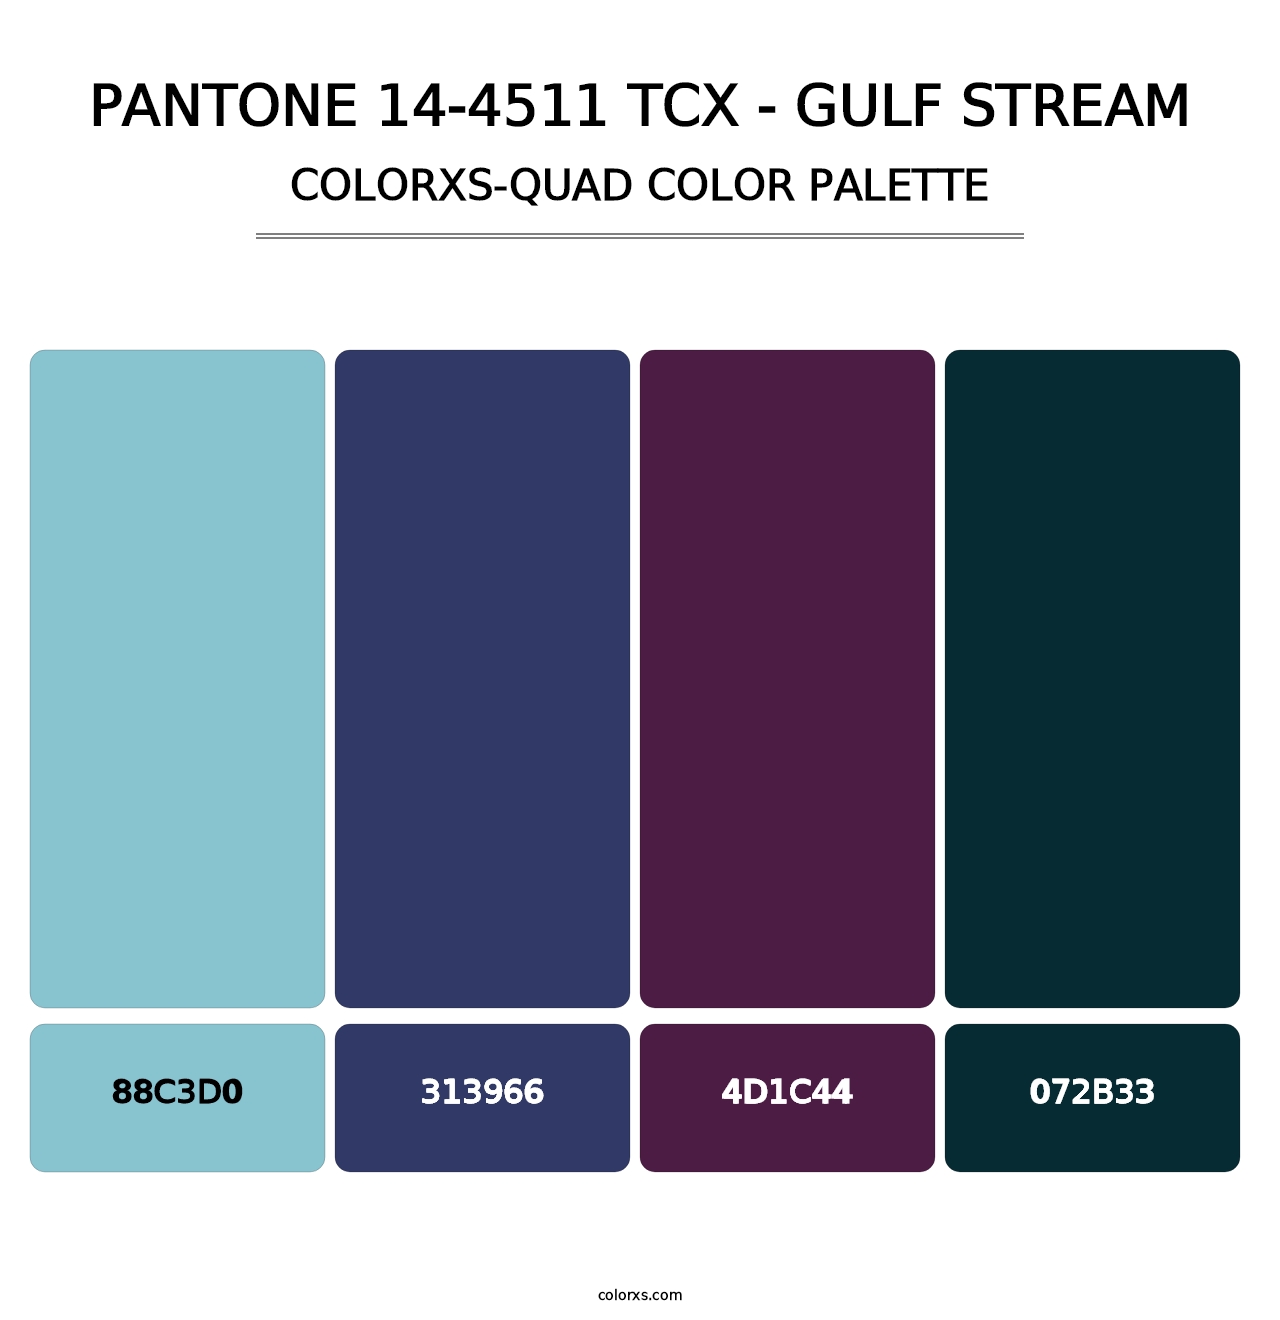 PANTONE 14-4511 TCX - Gulf Stream - Colorxs Quad Palette